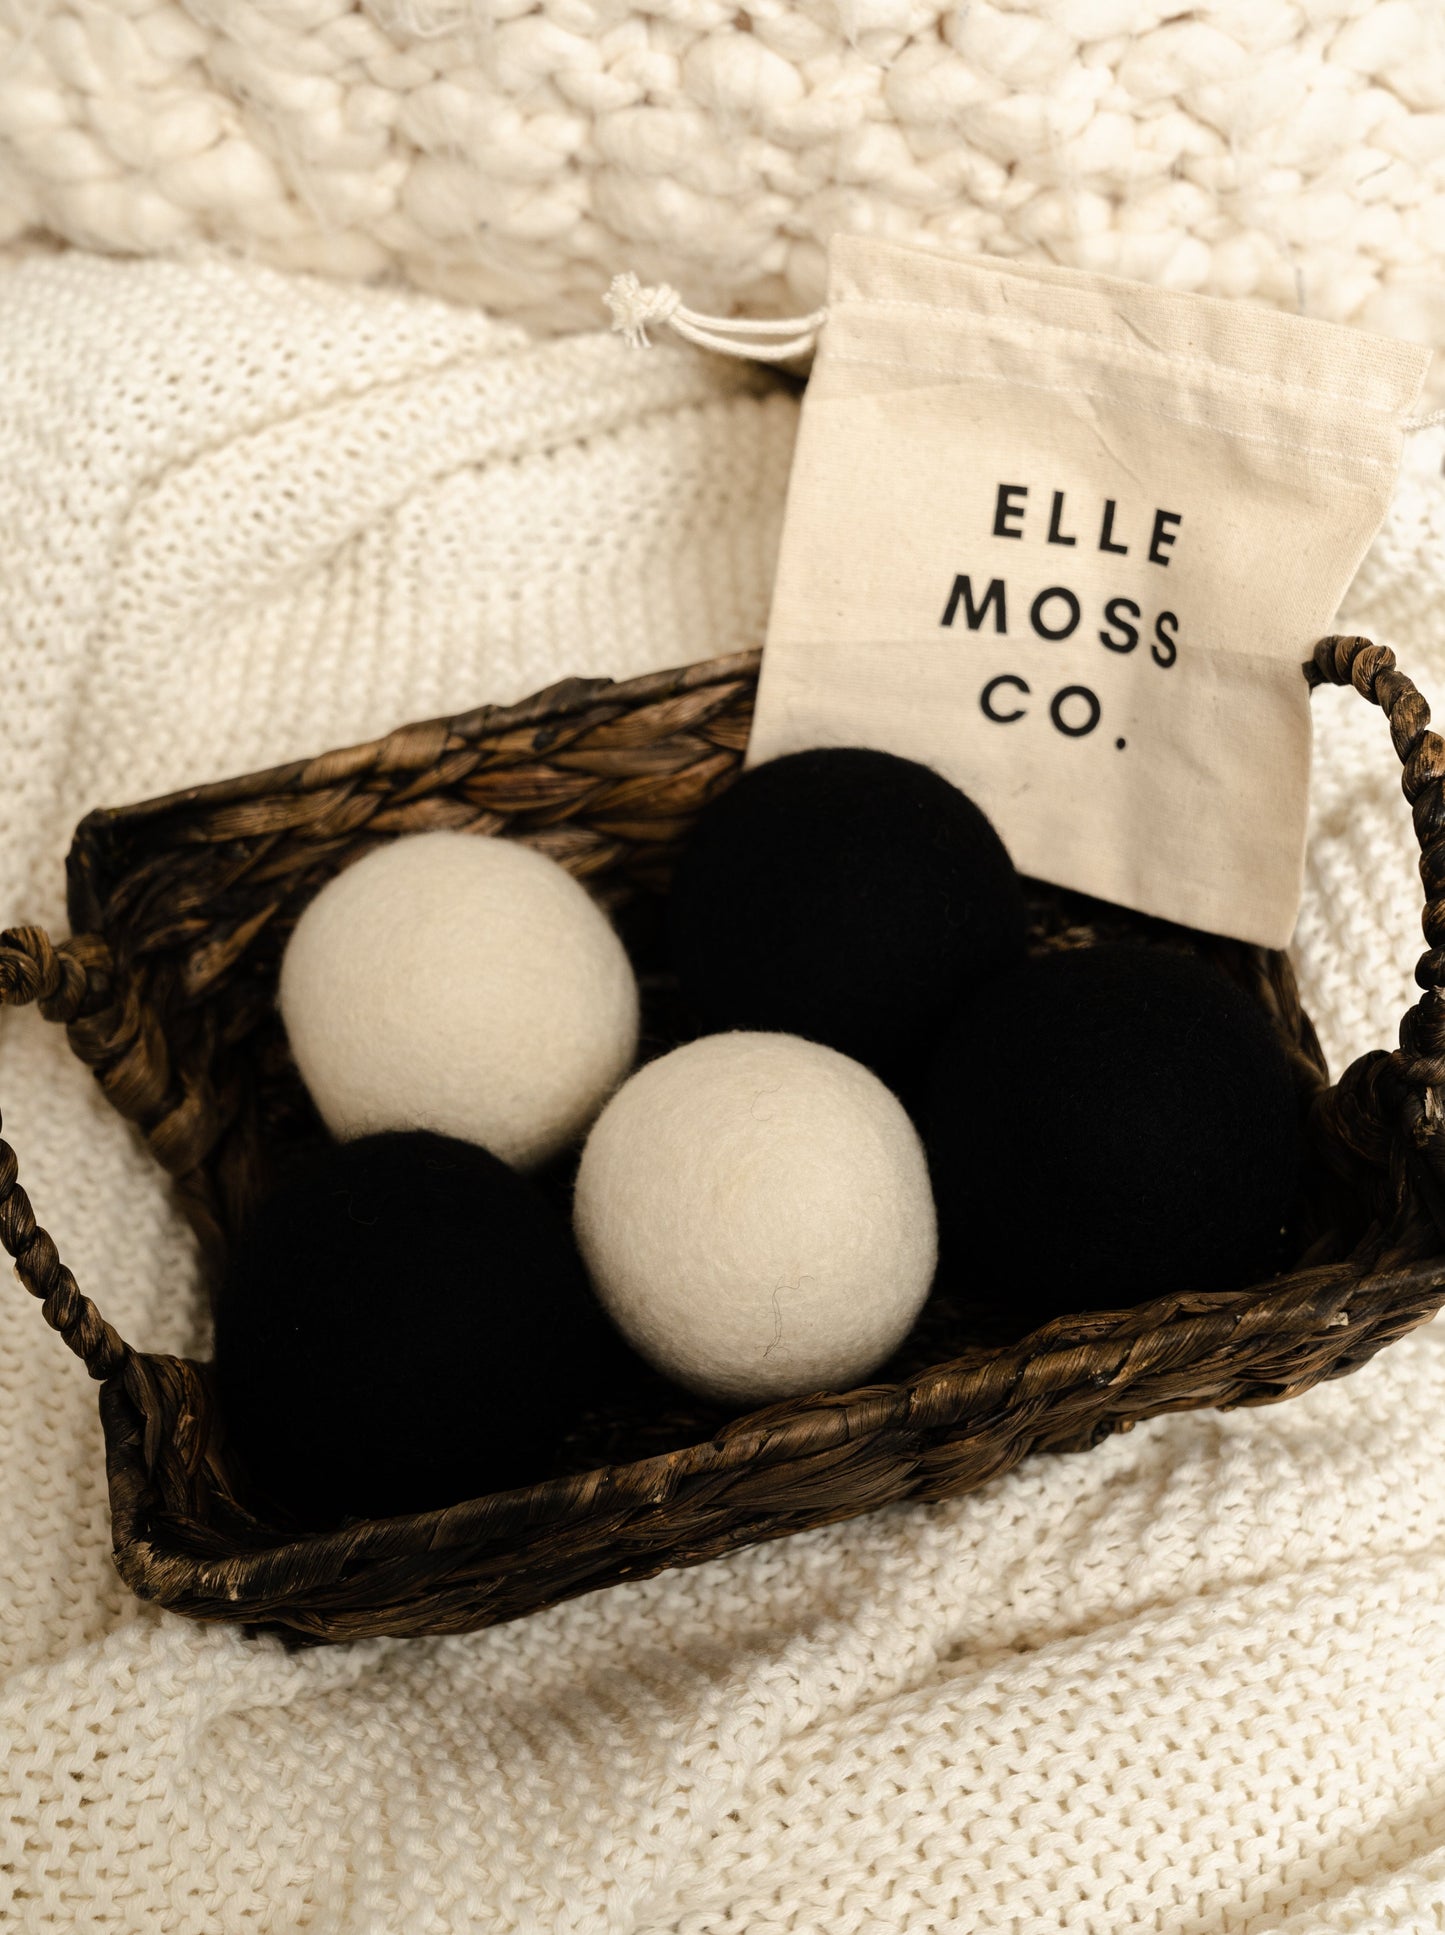 elle moss, co.'s eco wool laundry balls